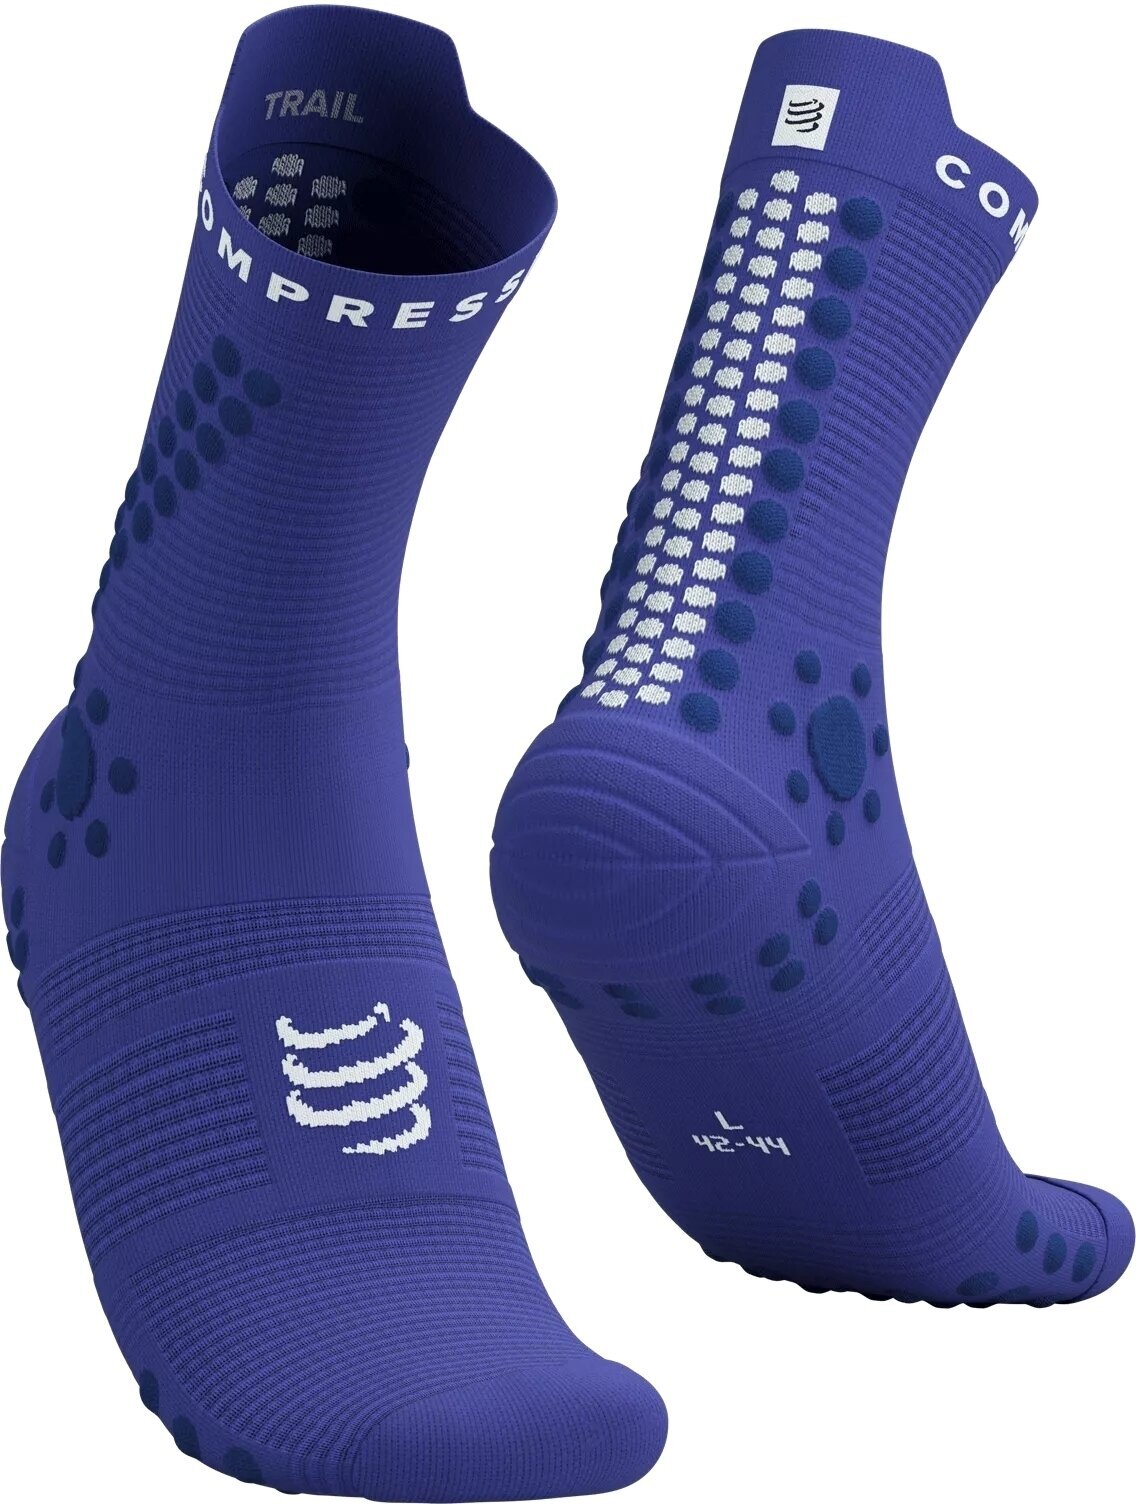 Running socks
 Compressport Pro Racing Socks V4.0 Trail Dazzling Blue/Dress Blues/White T3 Running socks